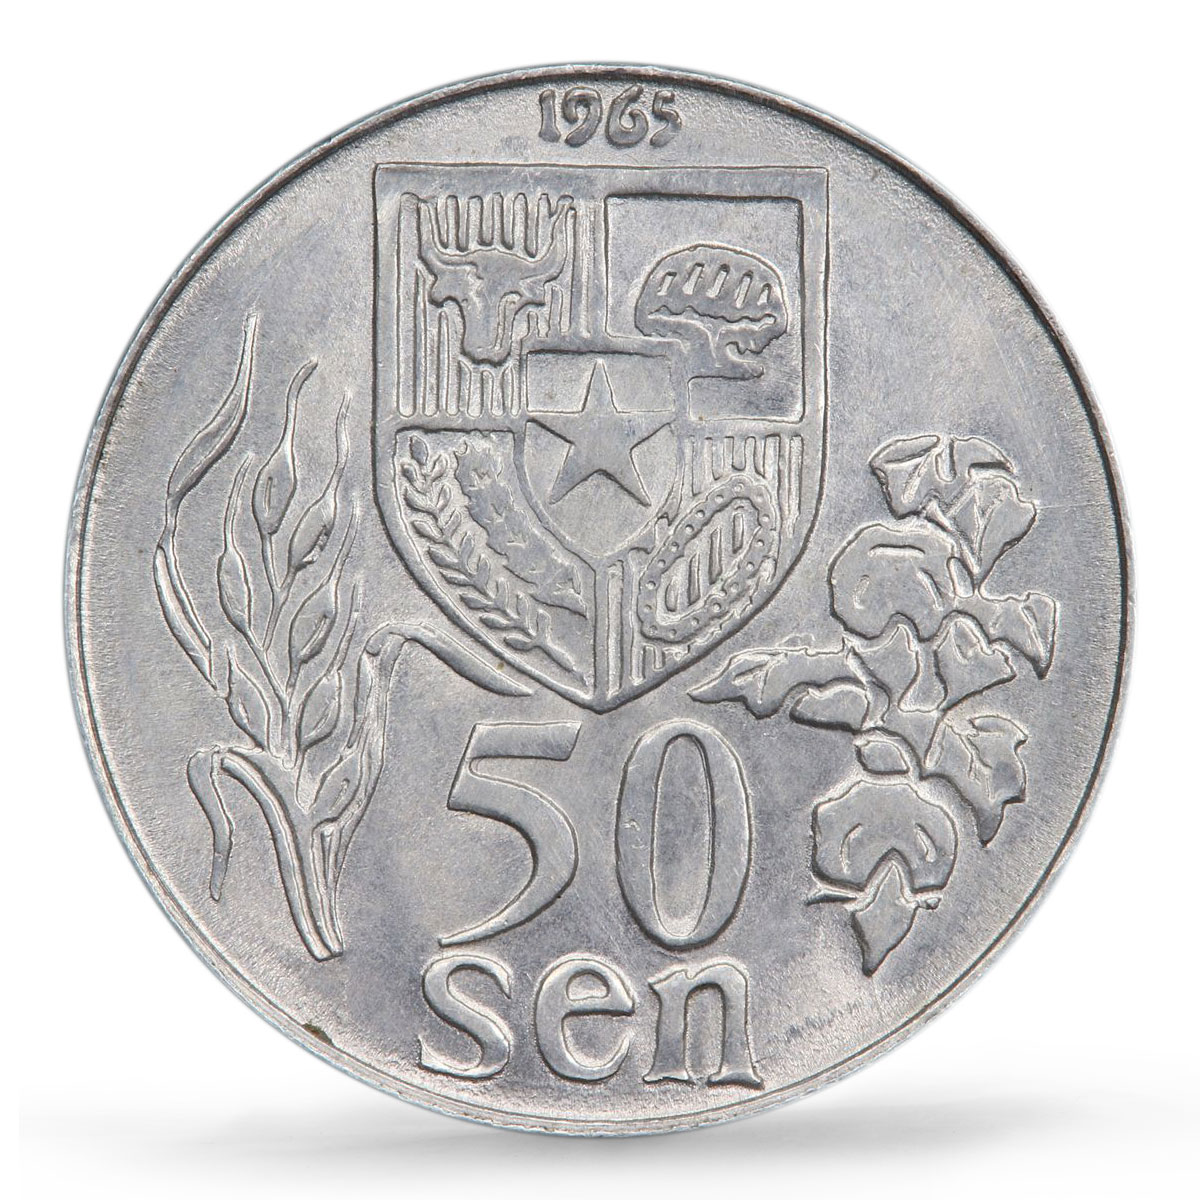 Indonesia Irian Barat 50 sen President Sukarno Km-Pn4 SP62 PCGS Al coin 1965